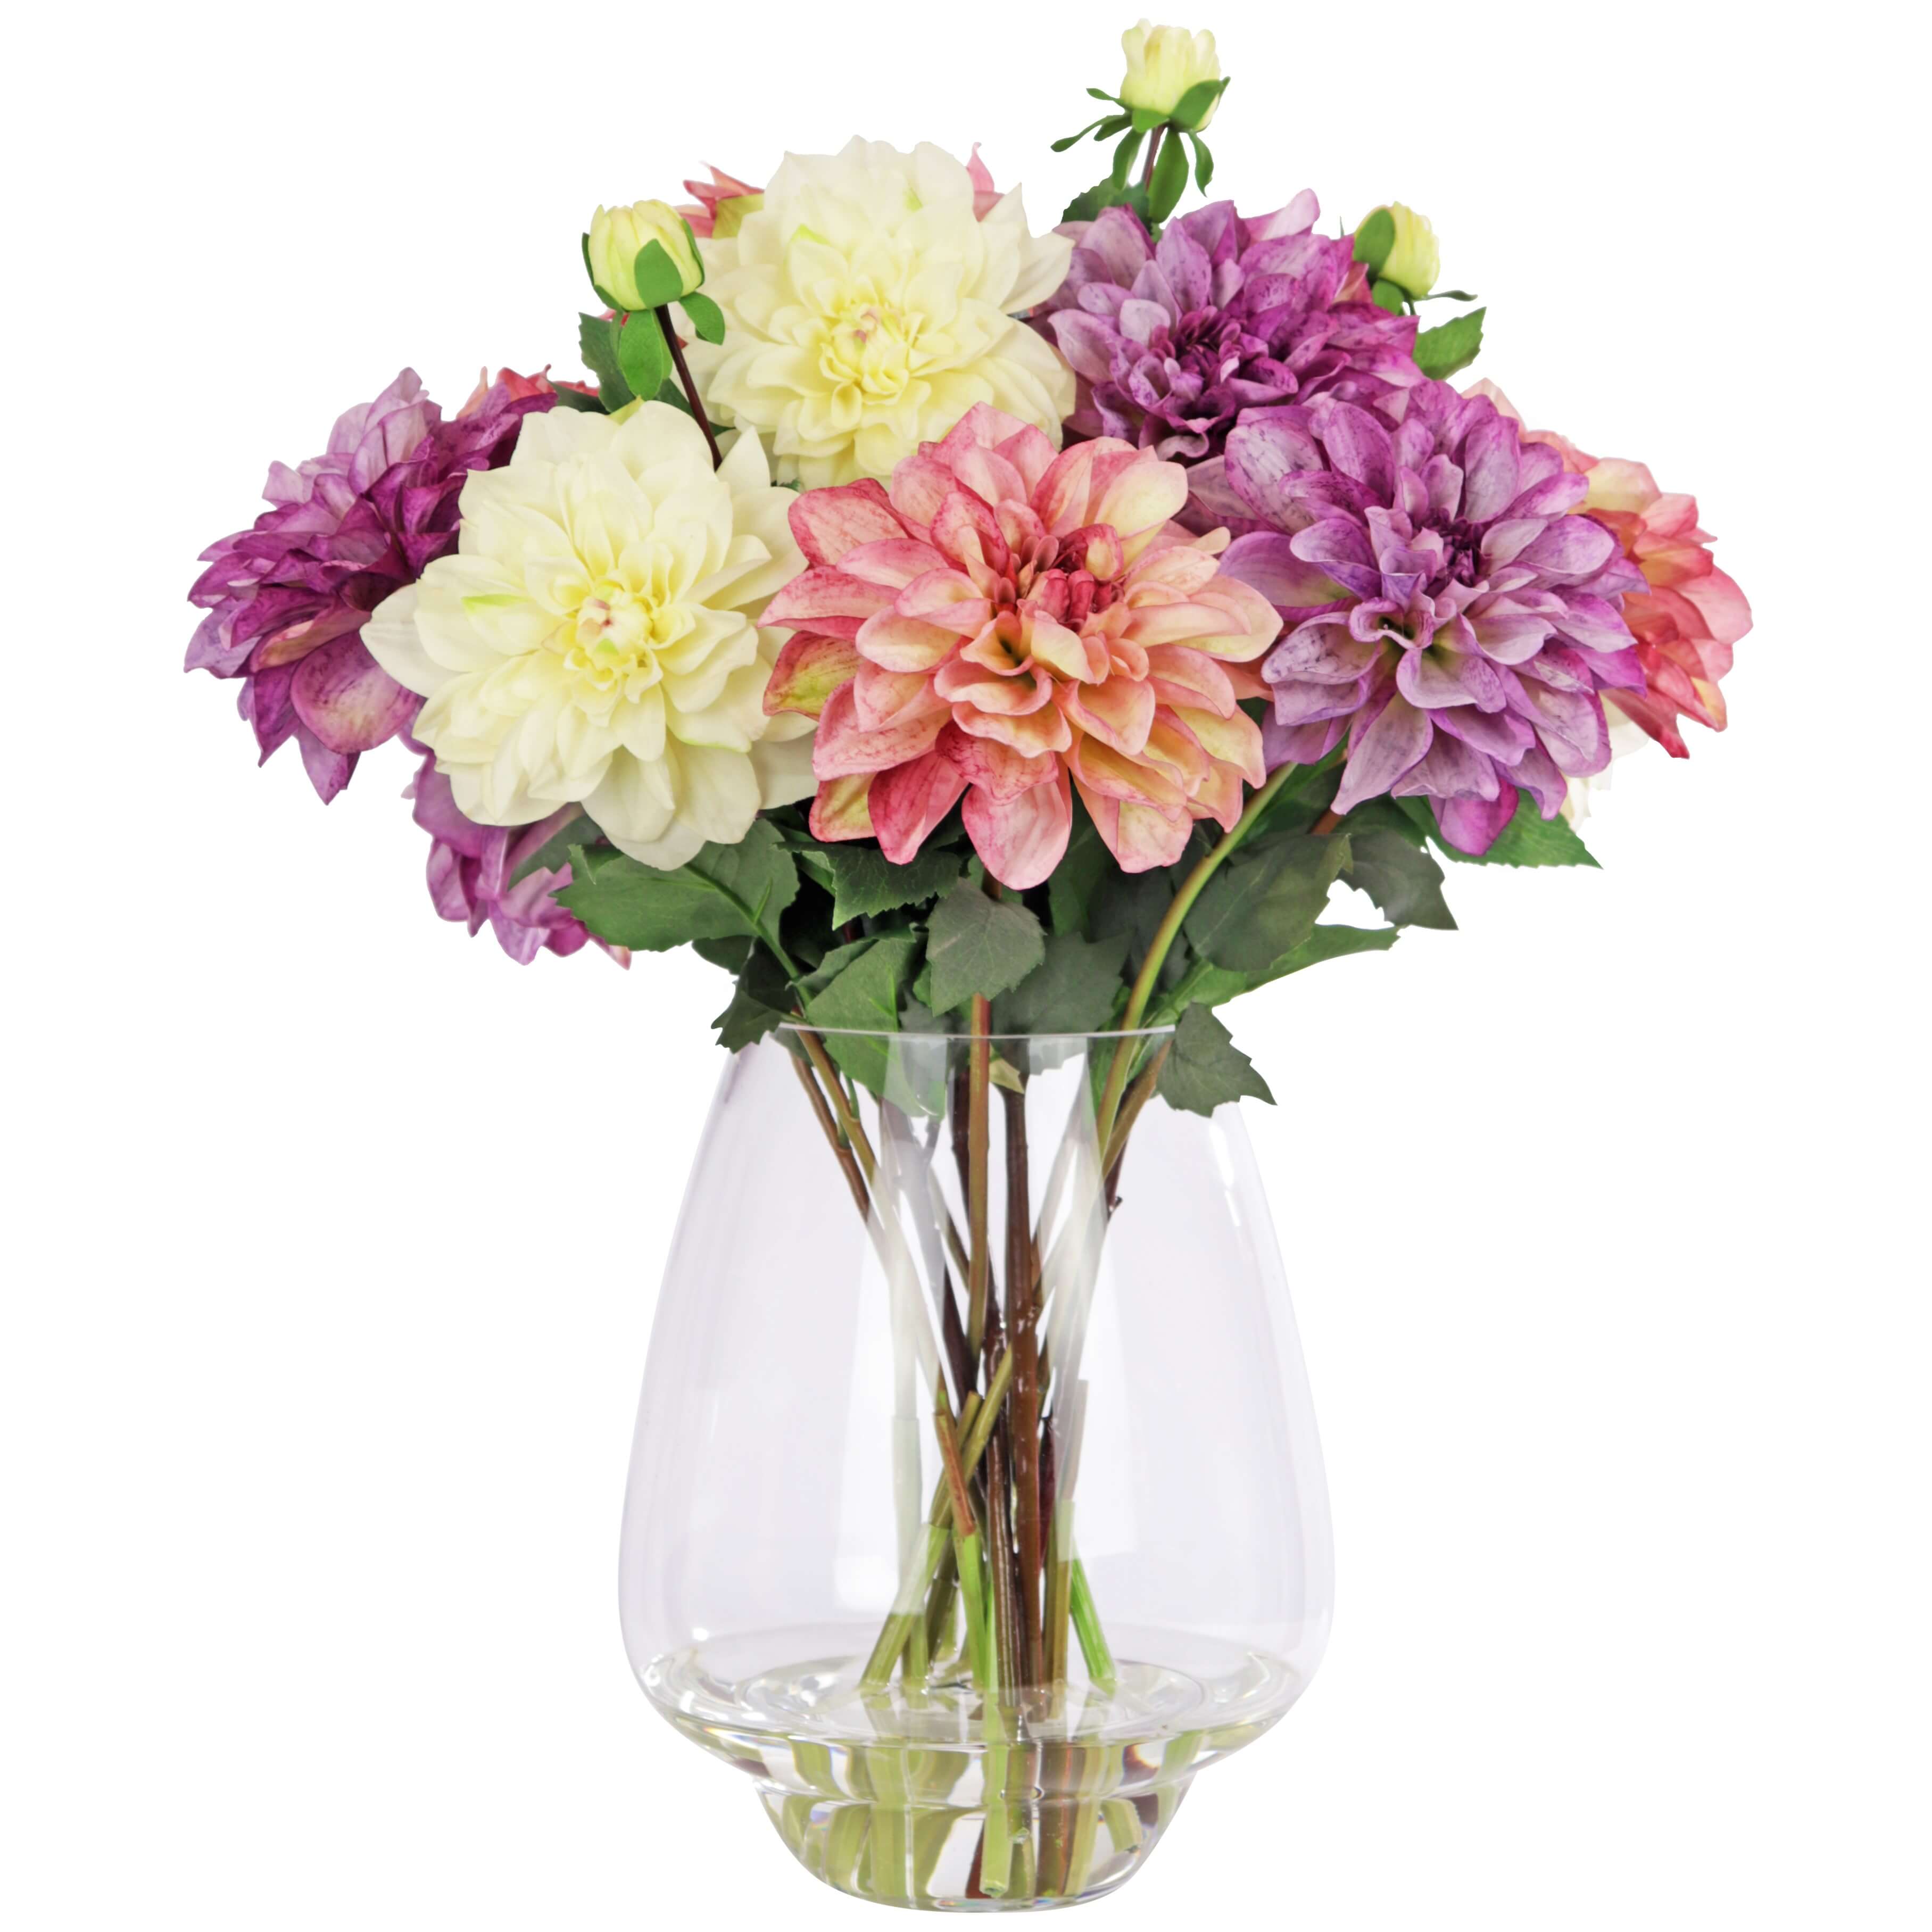 Artificial Dahlia flowers in vase